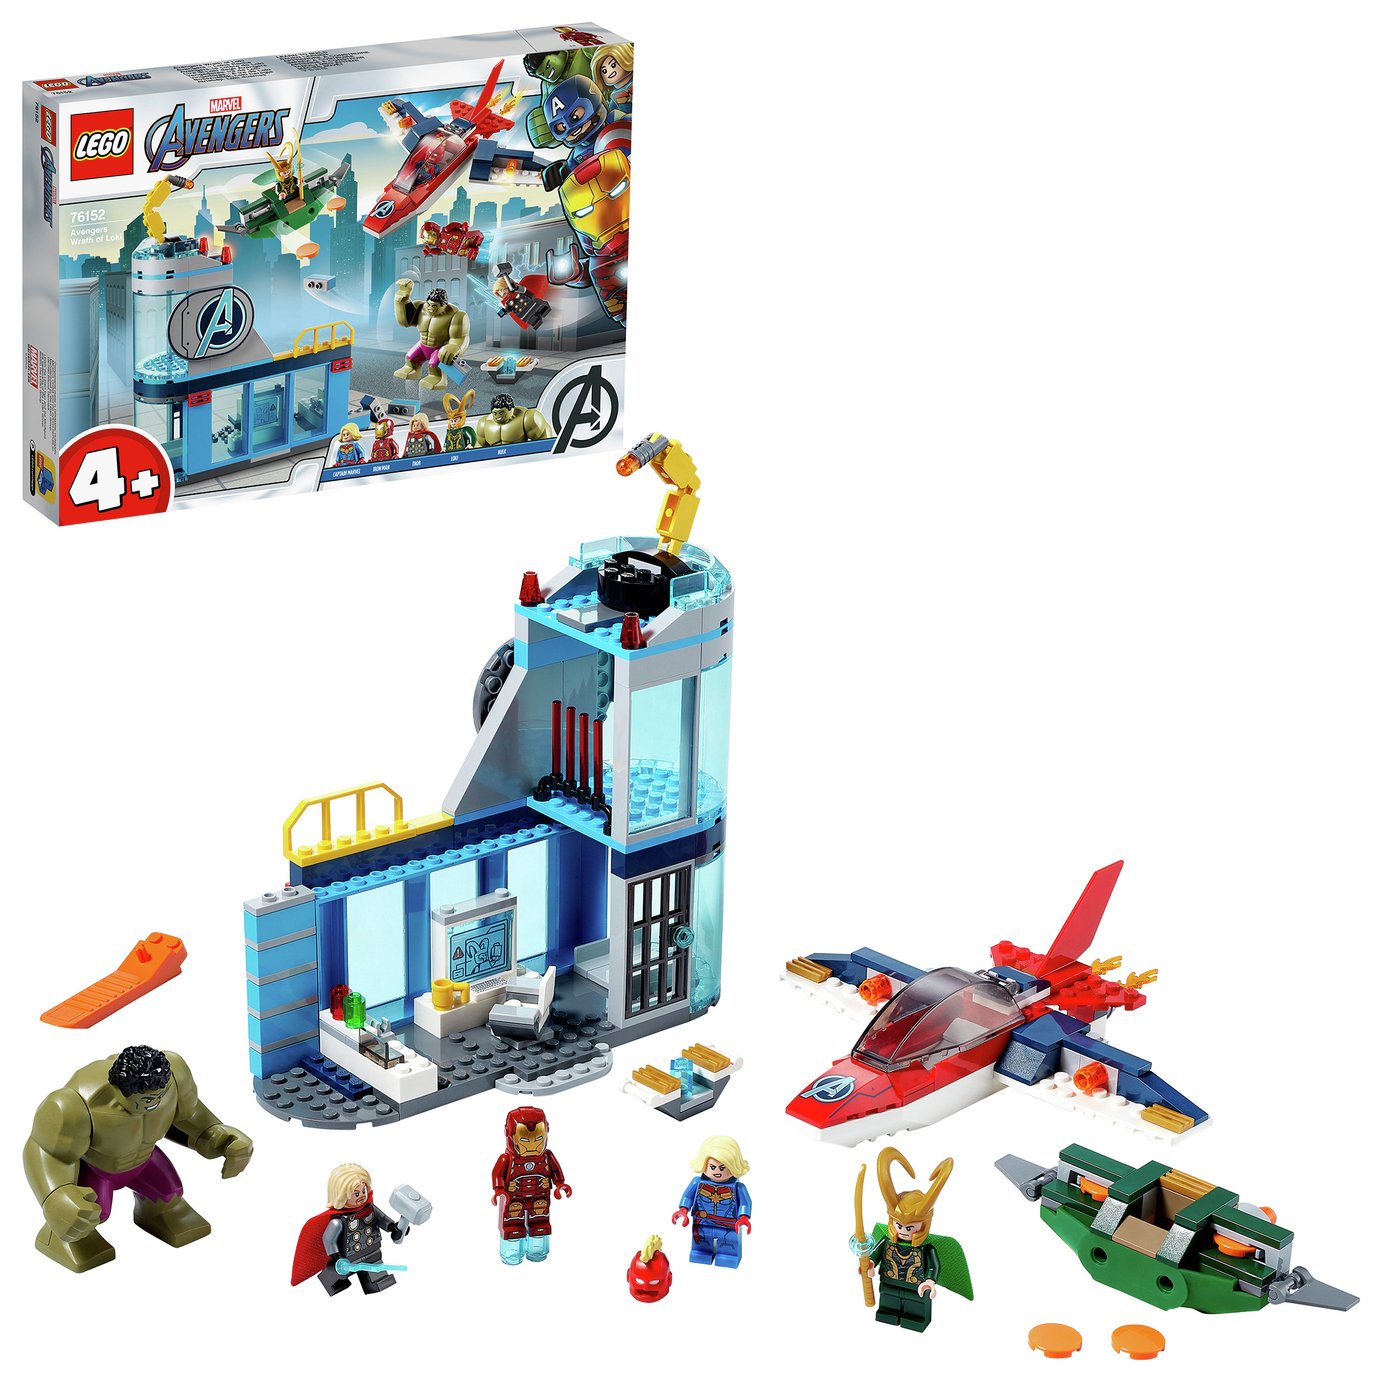 LEGO Marvel Avengers Wrath of Loki Set Review